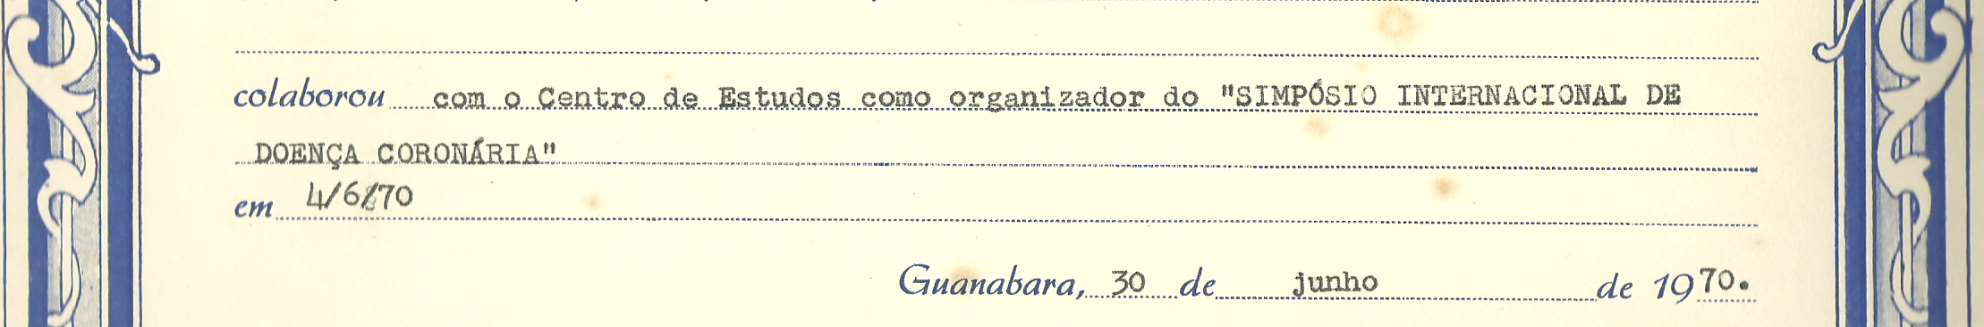 1970: Certificado - Estado da Guanabara Instituto Estadual de Cardiologia